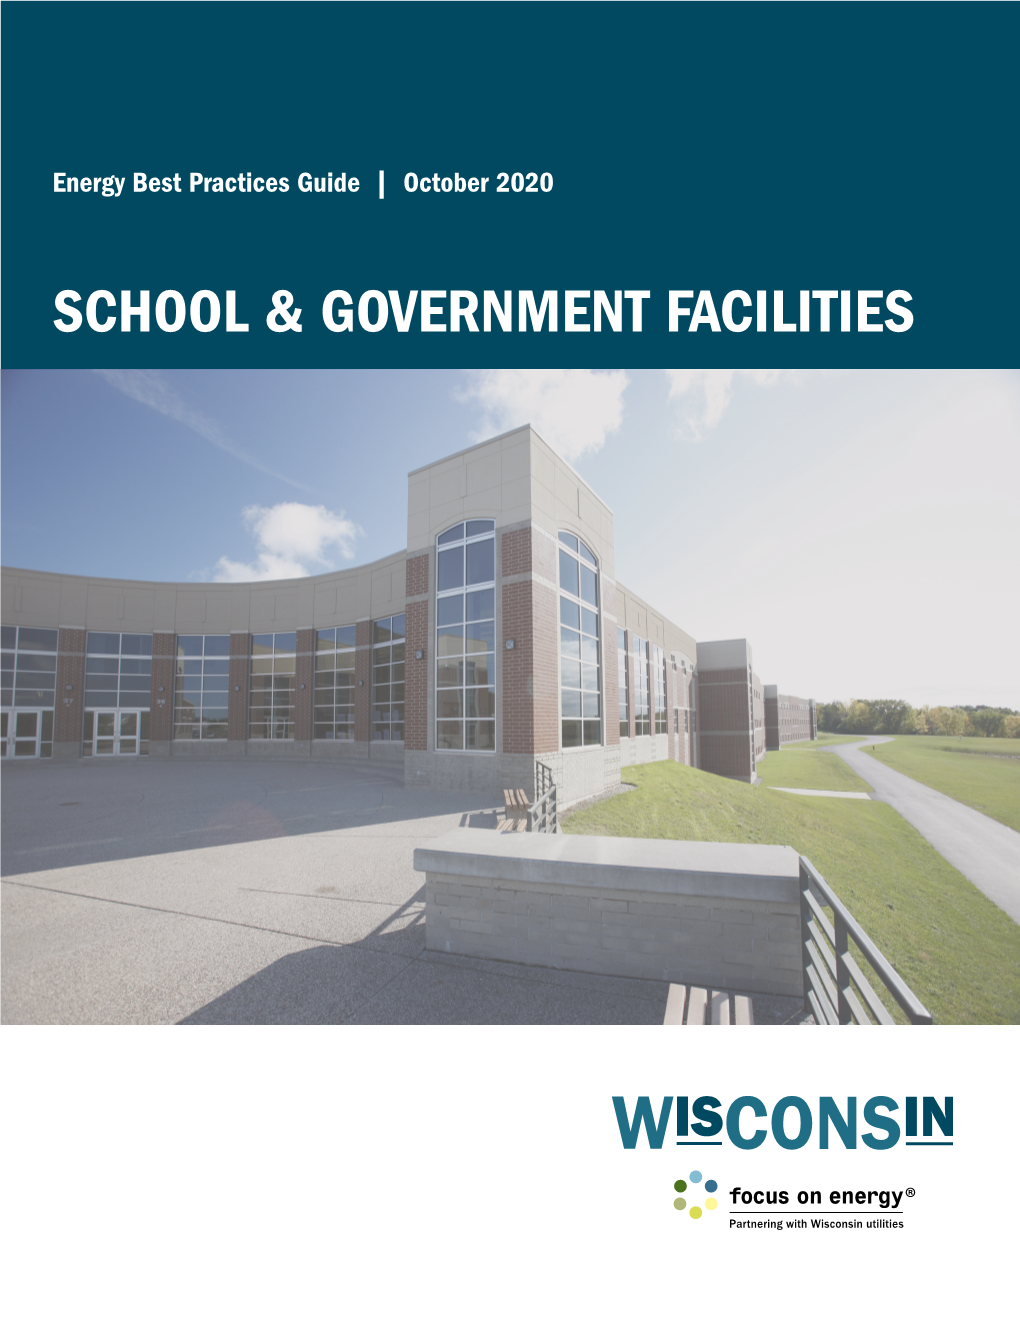 School & Government Facilities